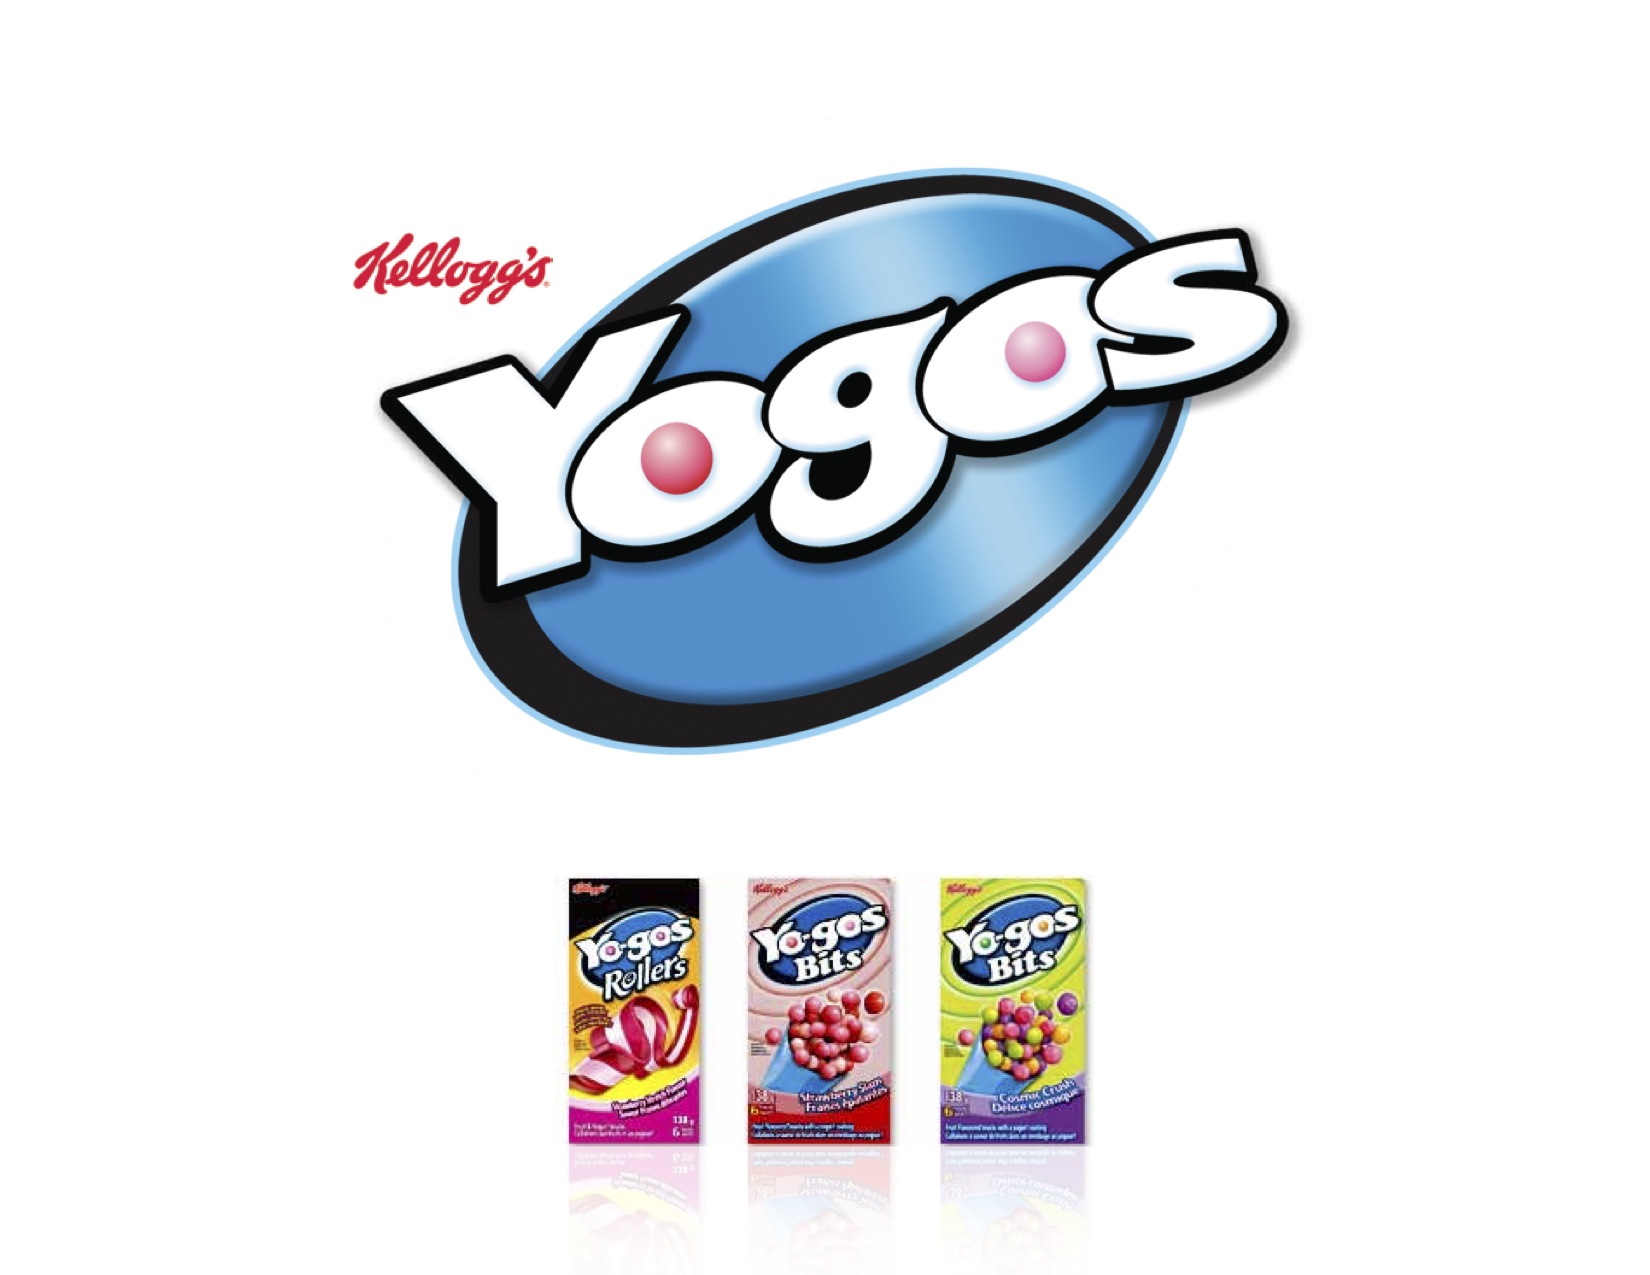 Kellogg's Yogos